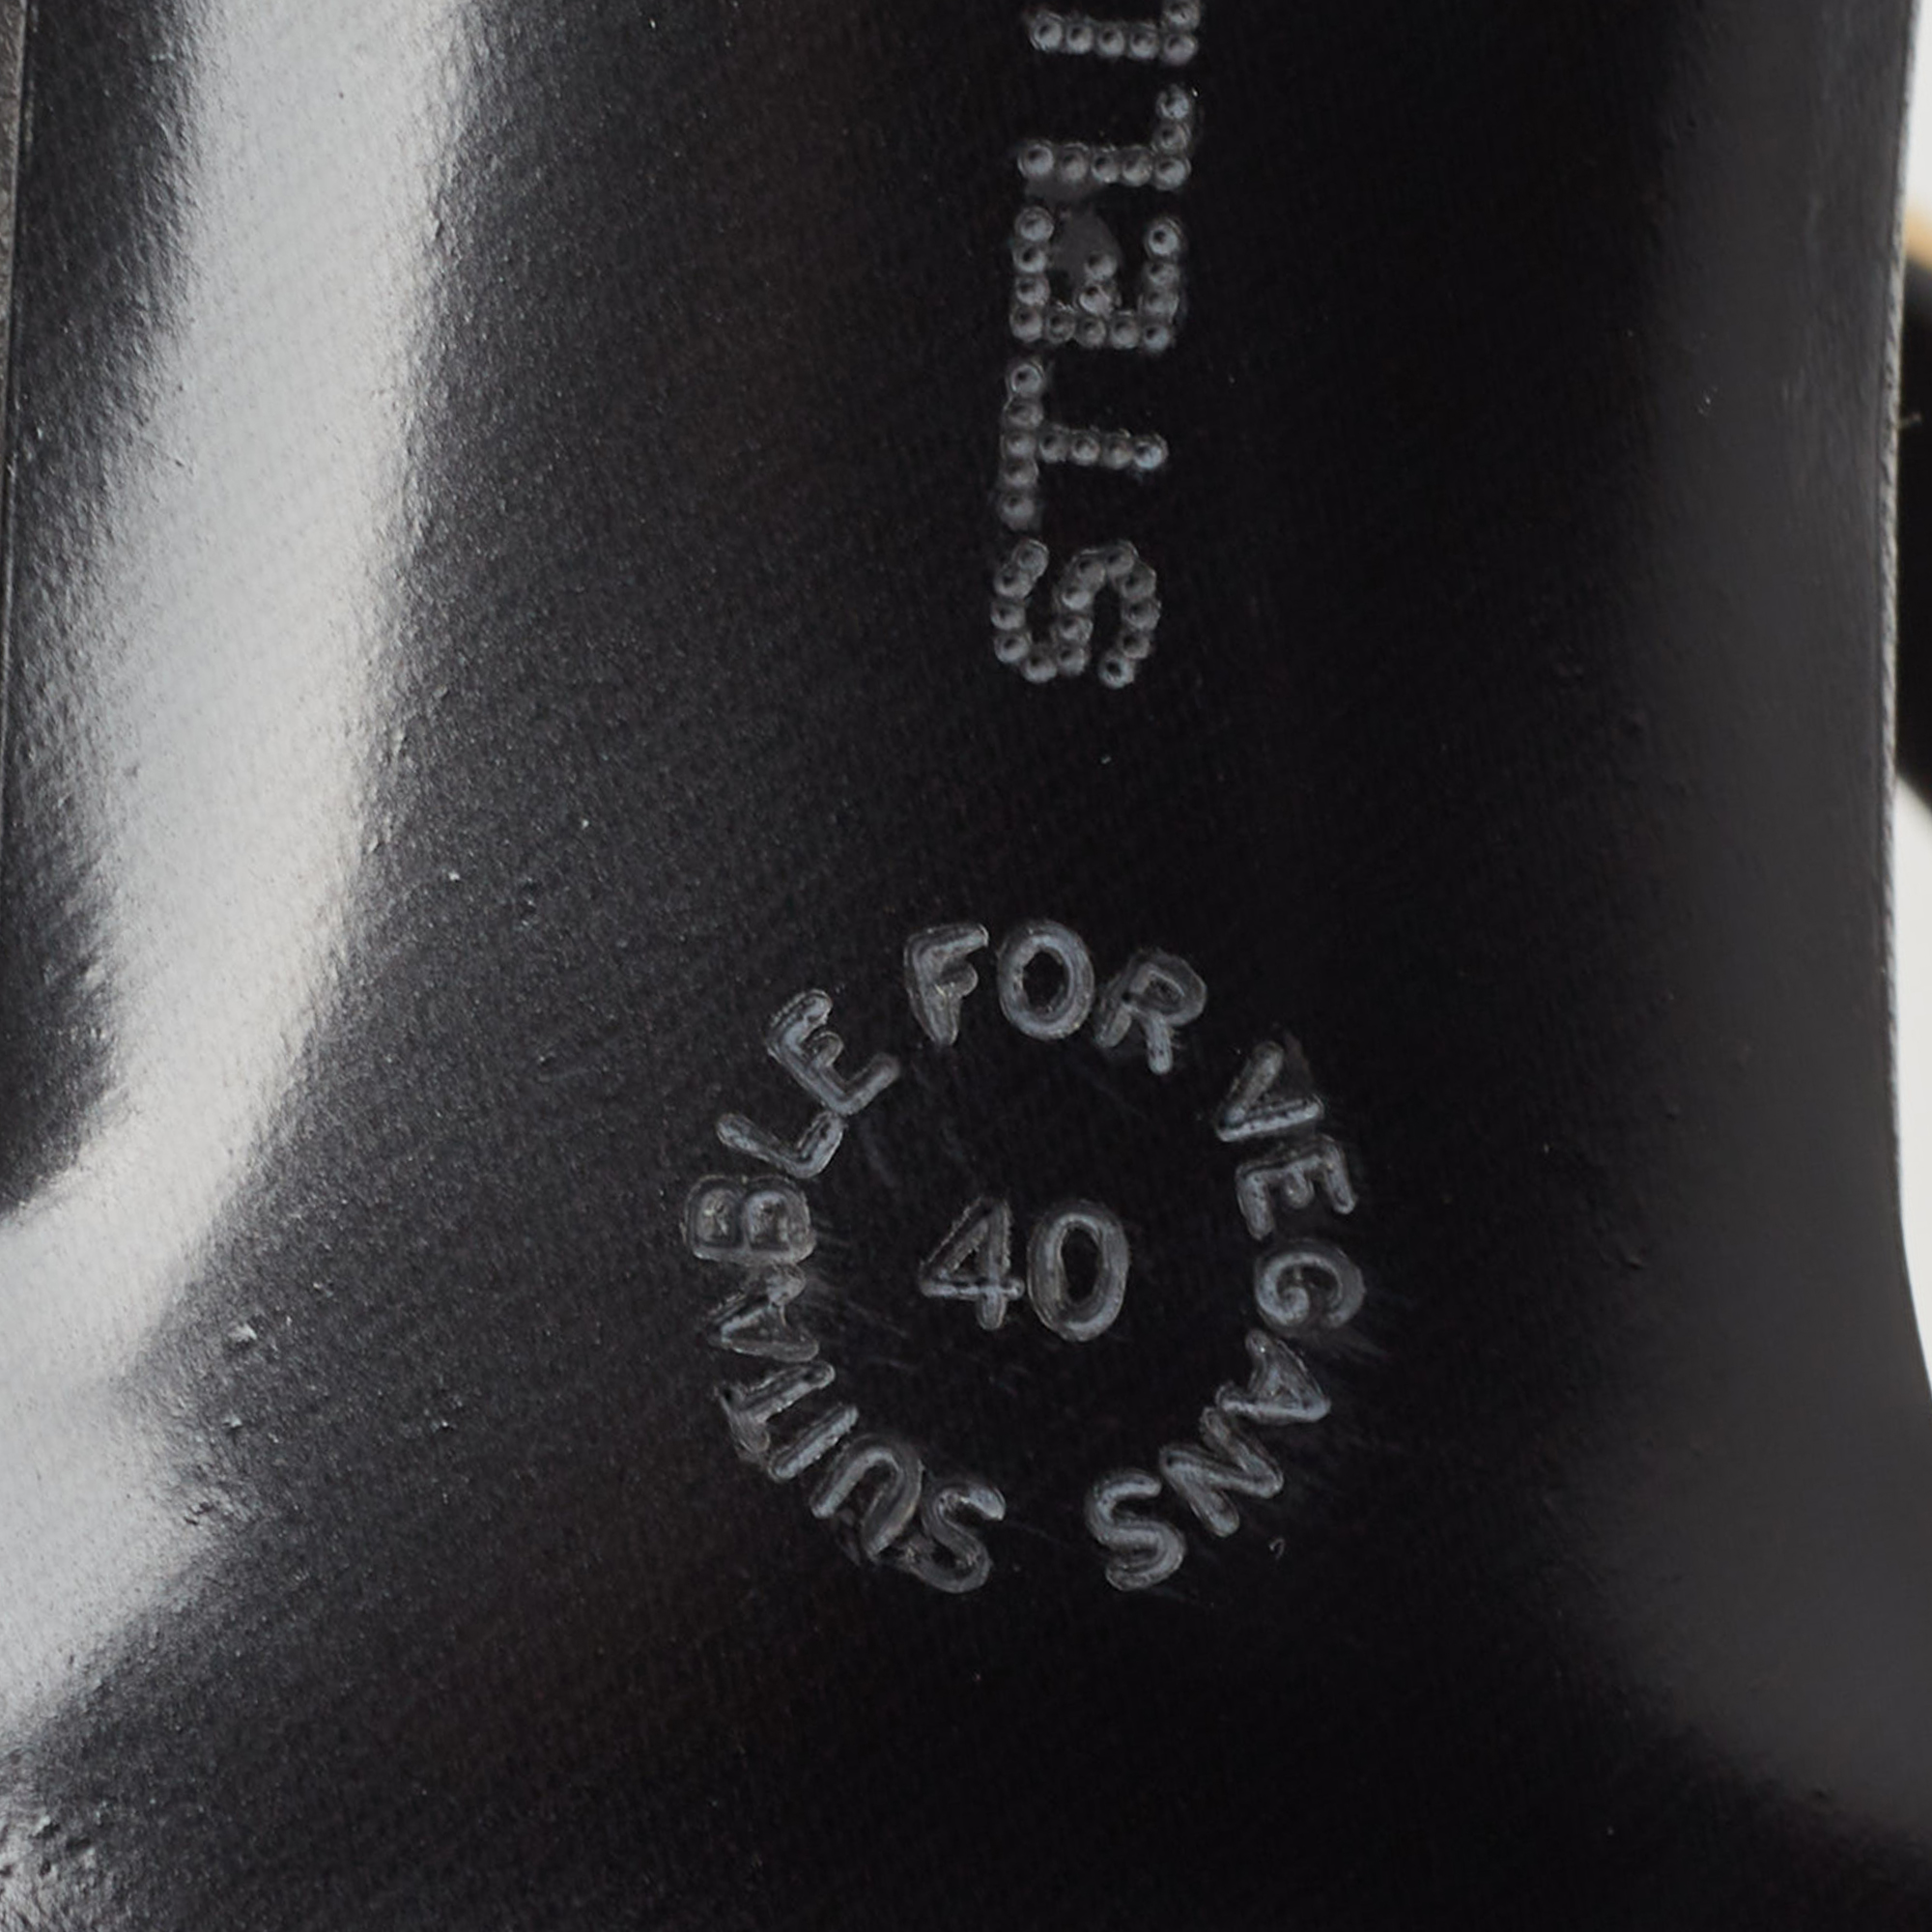 Stella Mccartne Black Faux Leather Chain-Link Accents Ankle Strap Sandals Size 40